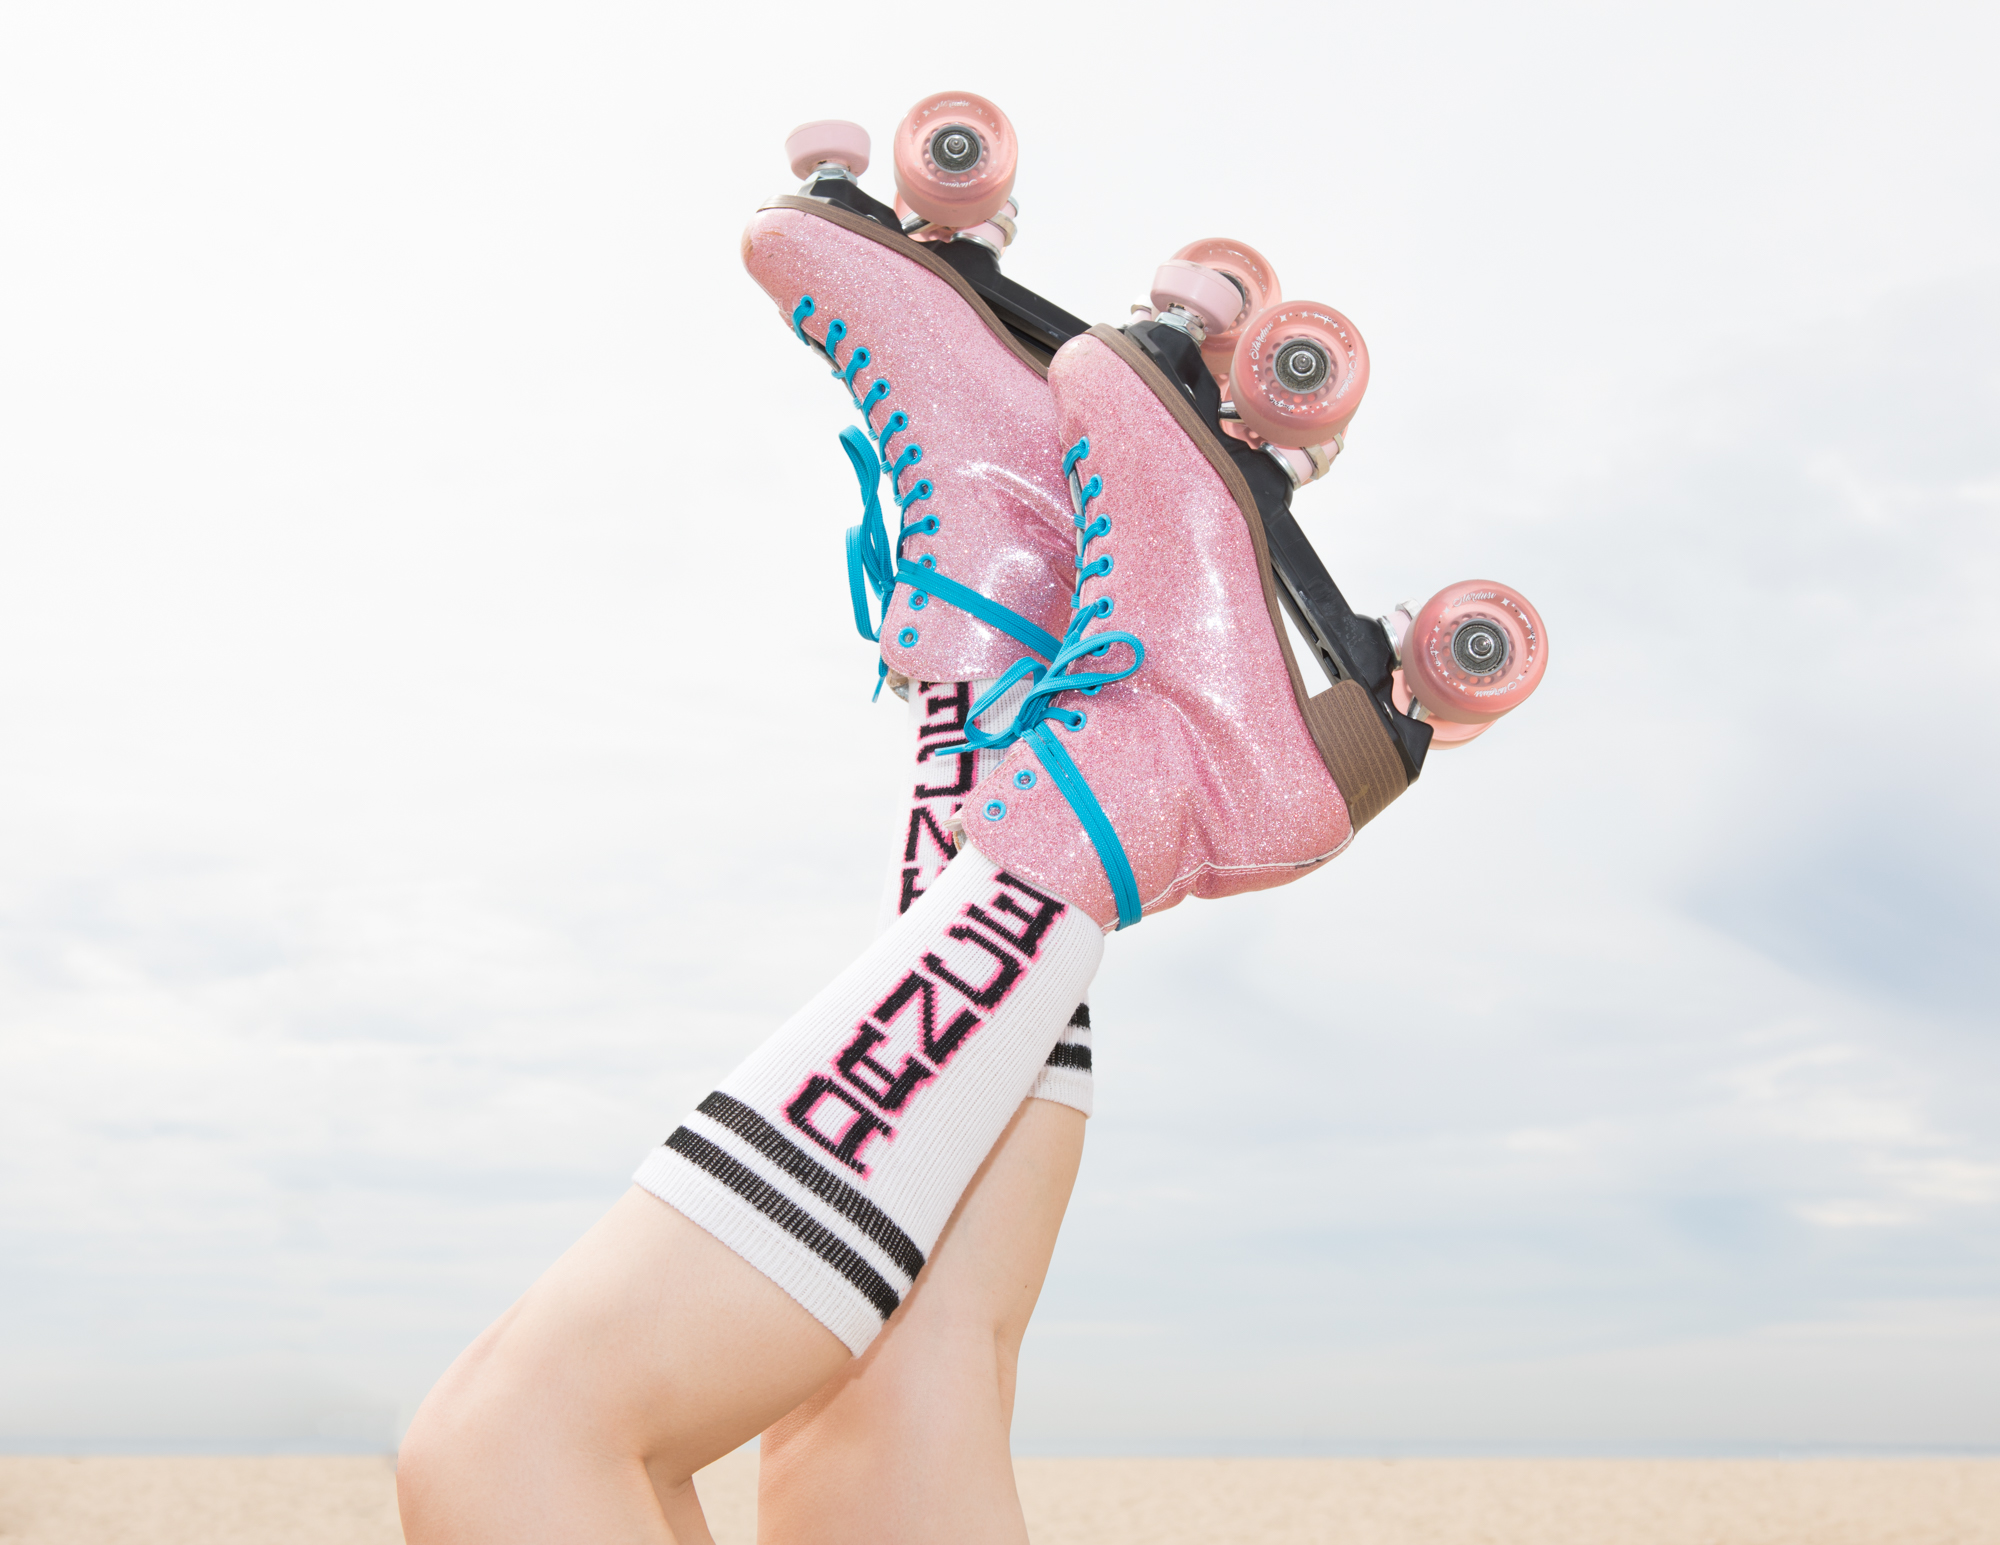 Jenna's Skates (from the series LA Roller Girls)